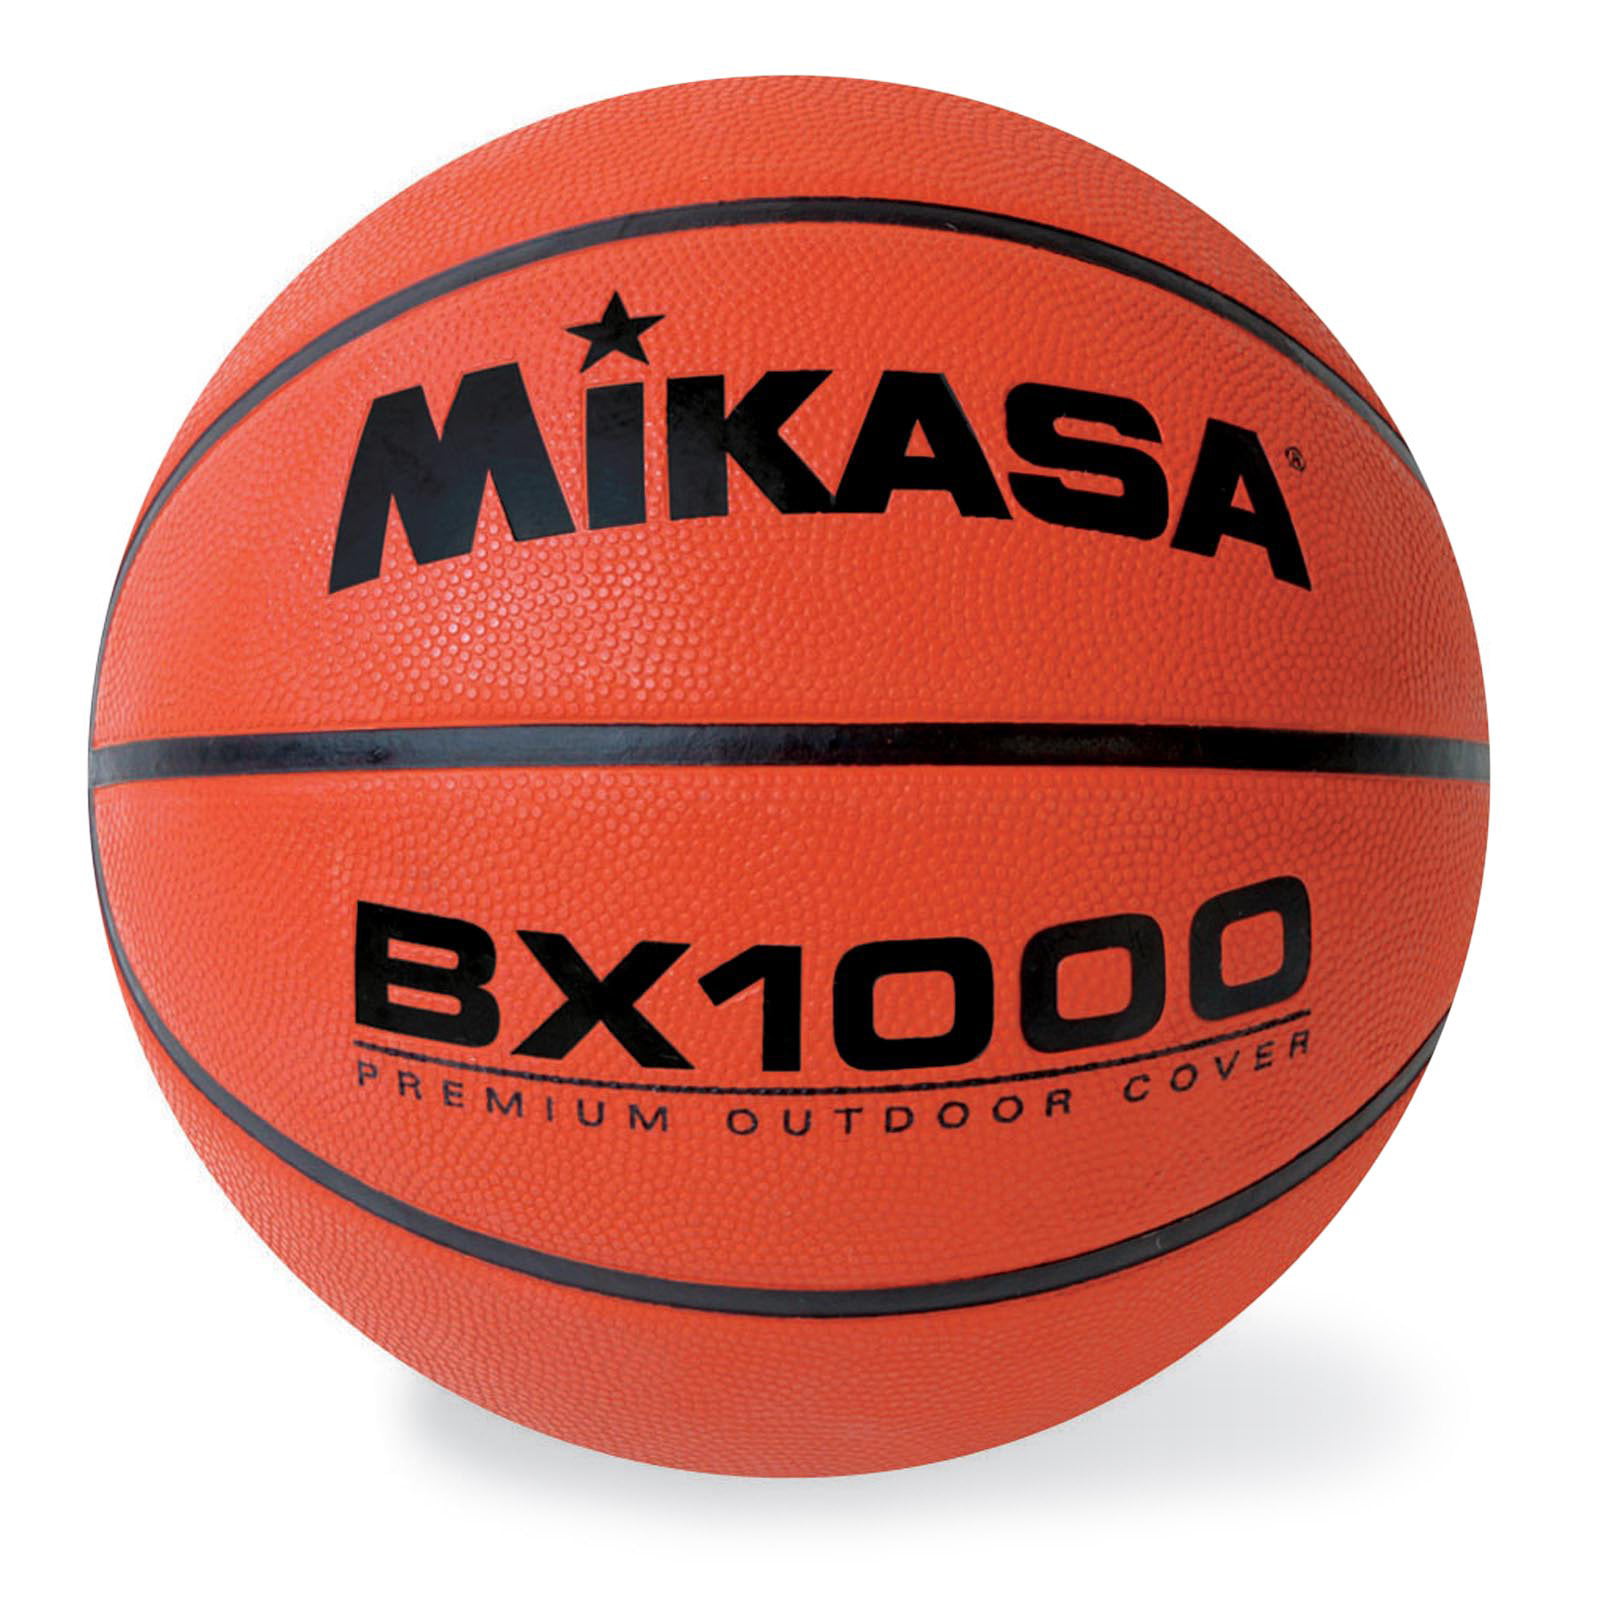 Mikasa BX1000 Series Outdoor Rubber Basketball Ball 